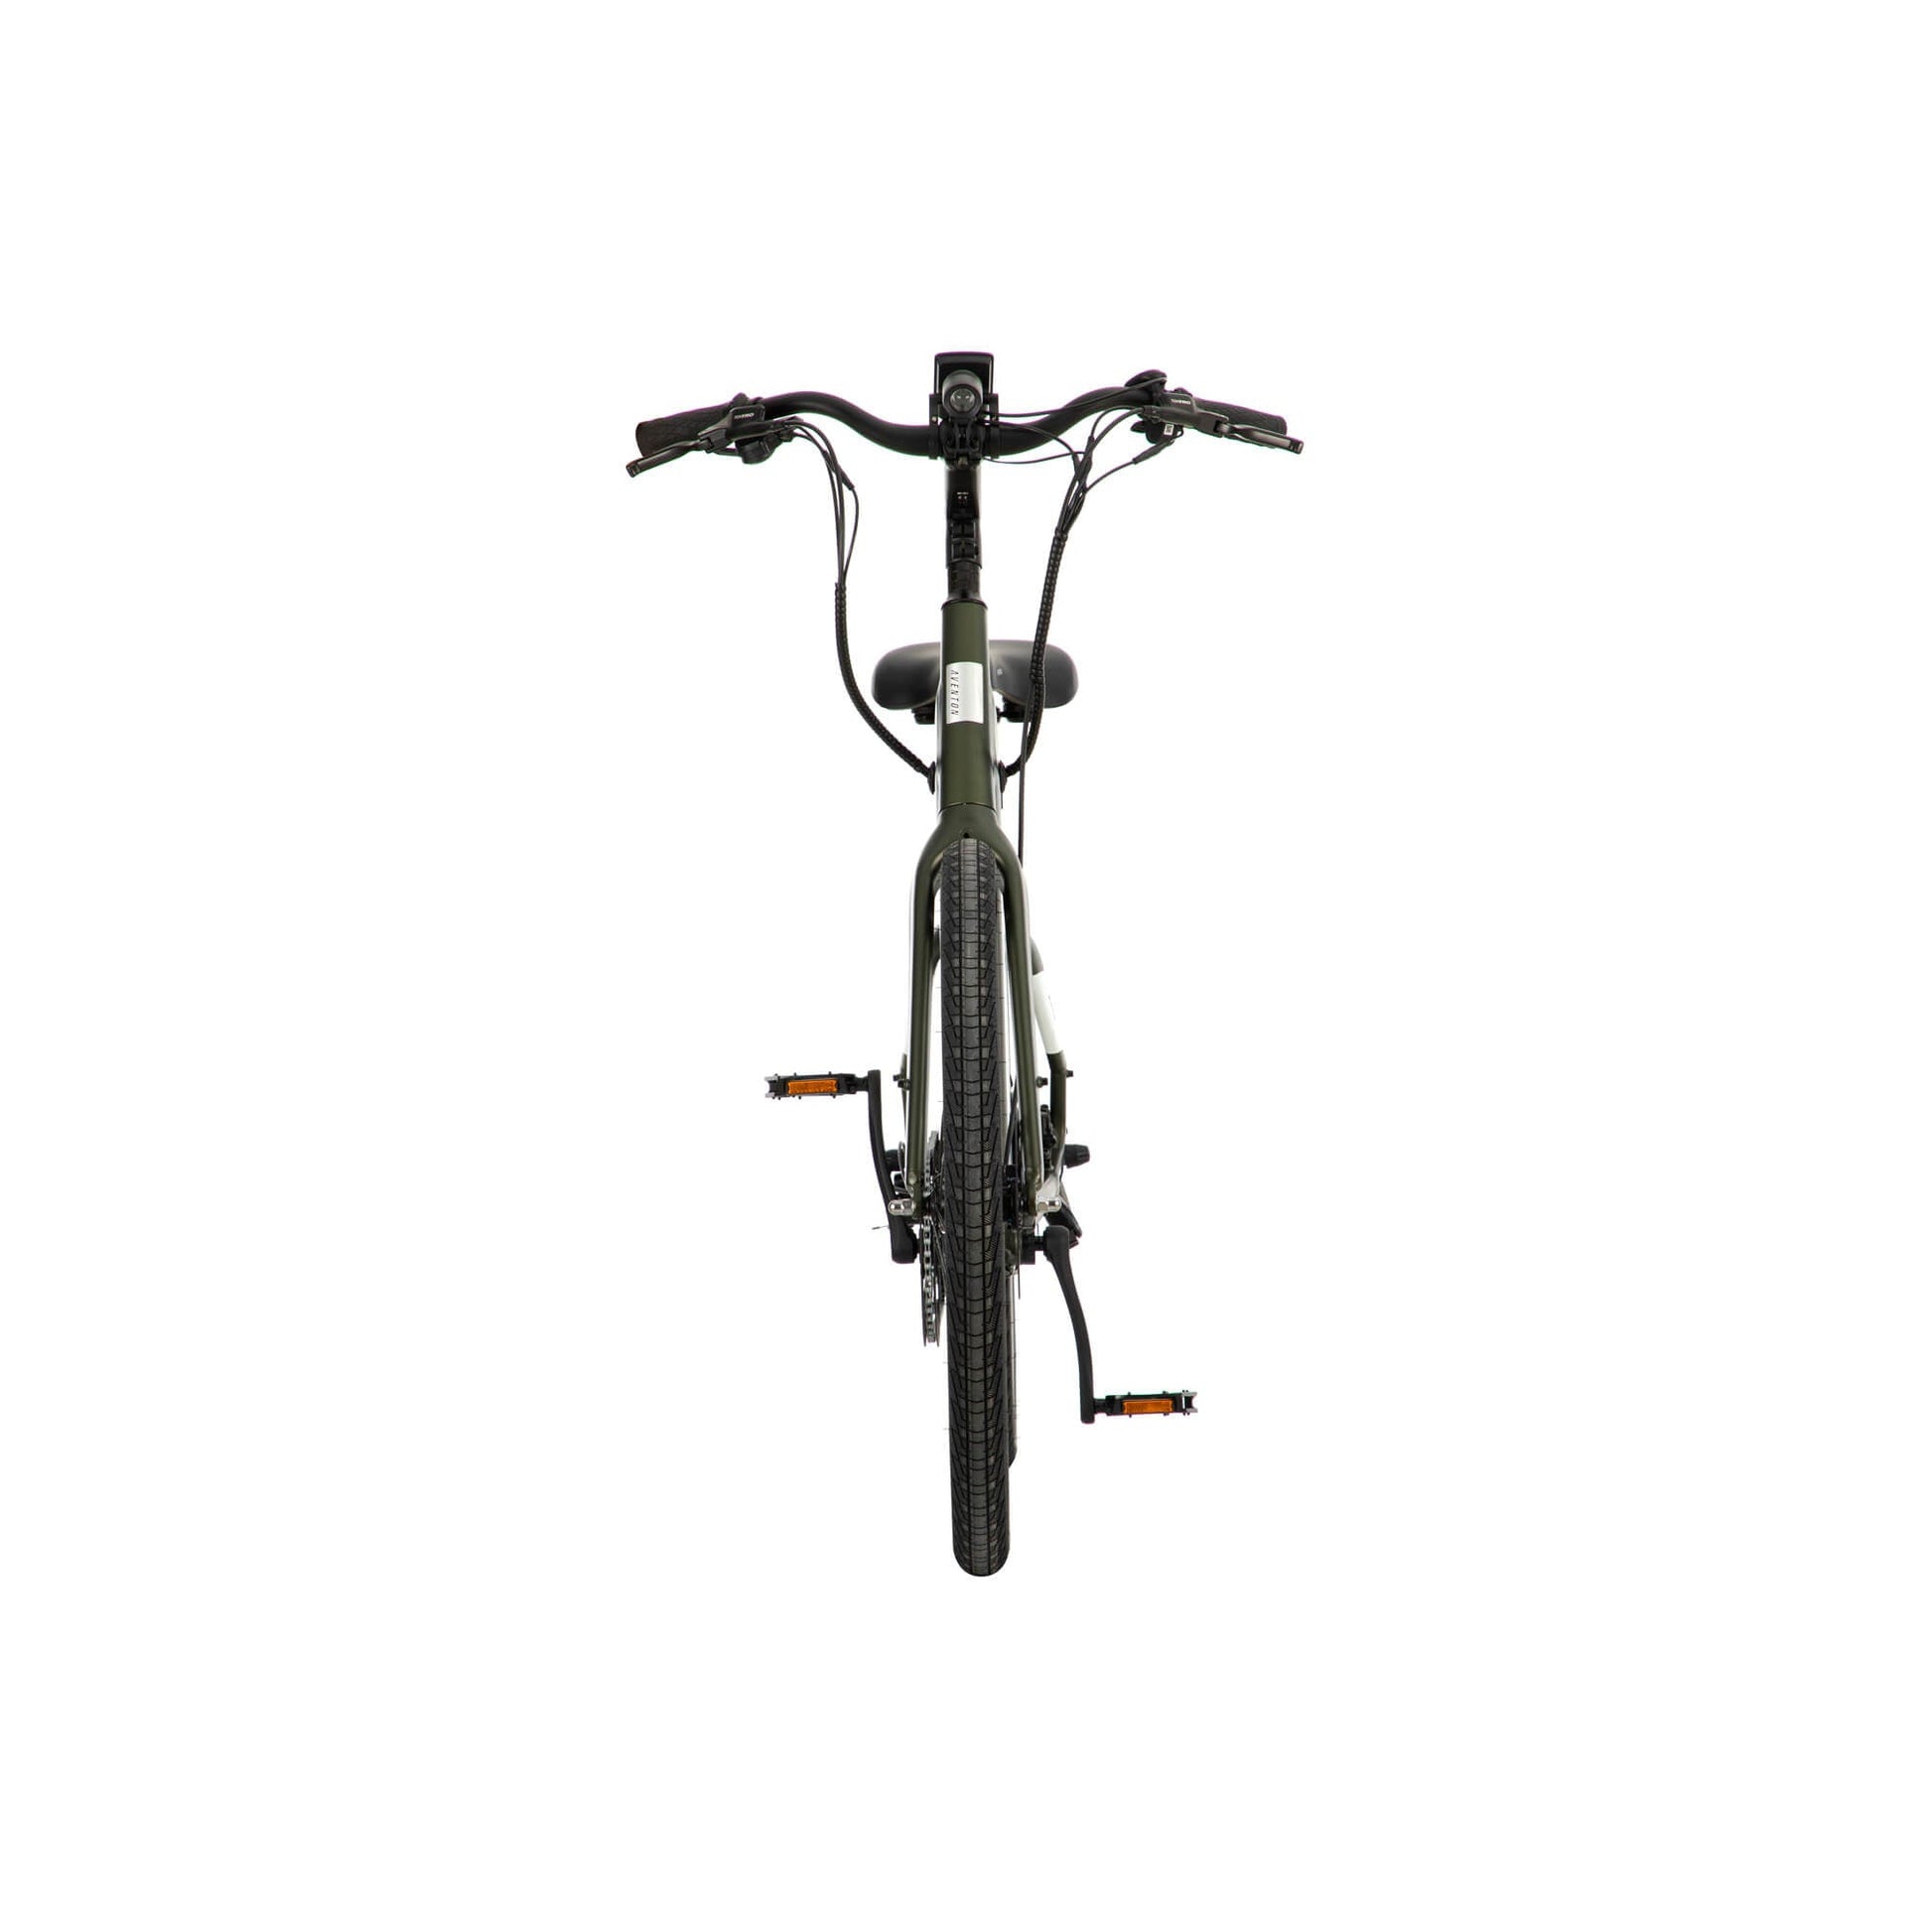 Aventon Pace 500 v3 E-Bike - Bikes - Bicycle Warehouse